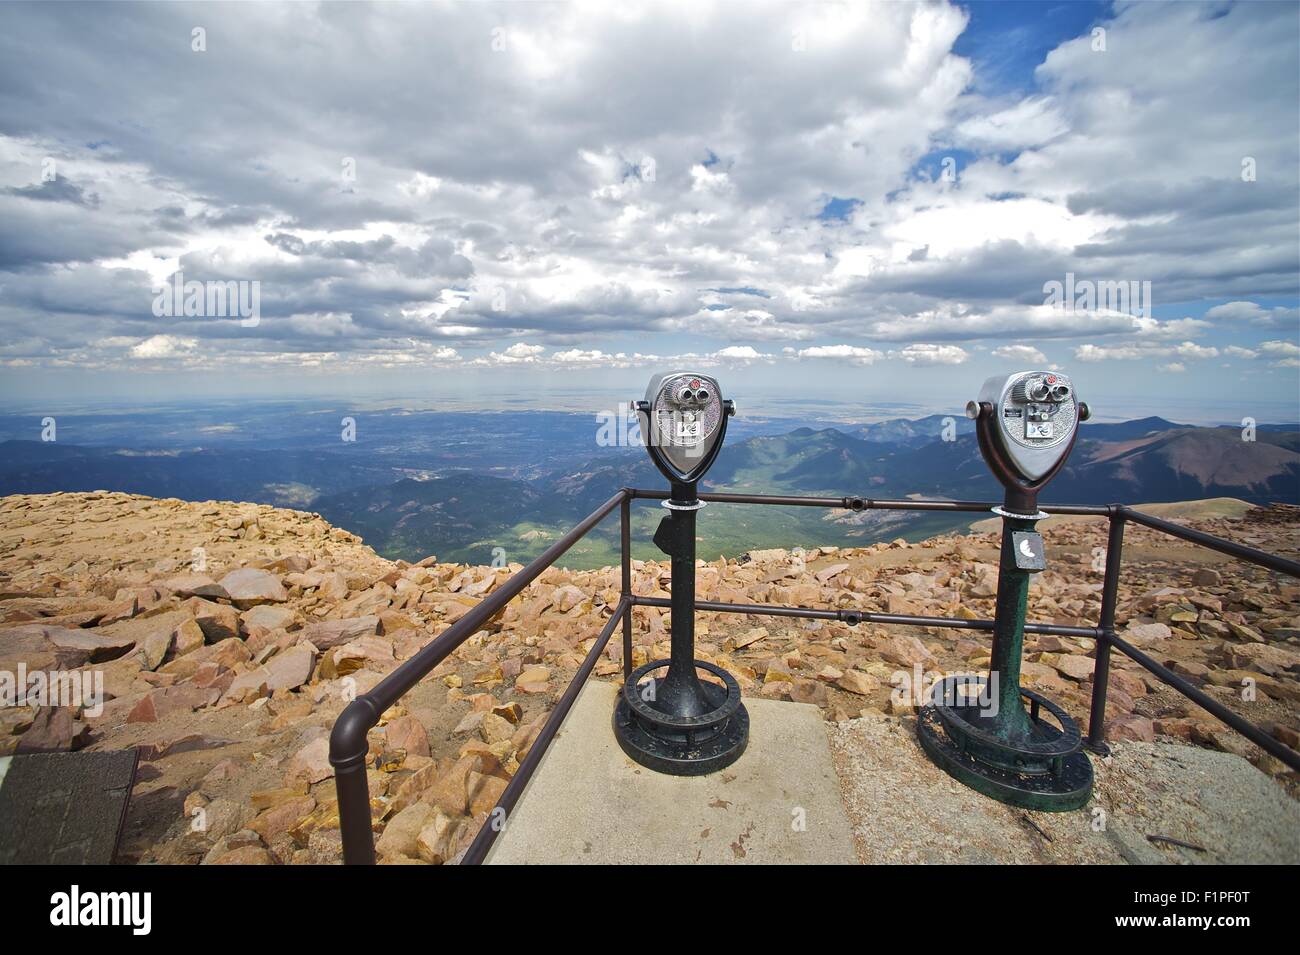 Pikes Peak Summit and Commercial Binoculars on the Concrete Deck. Pikes Peak Mountain, Colorado Springs, Colorado, USA. Stock Photo